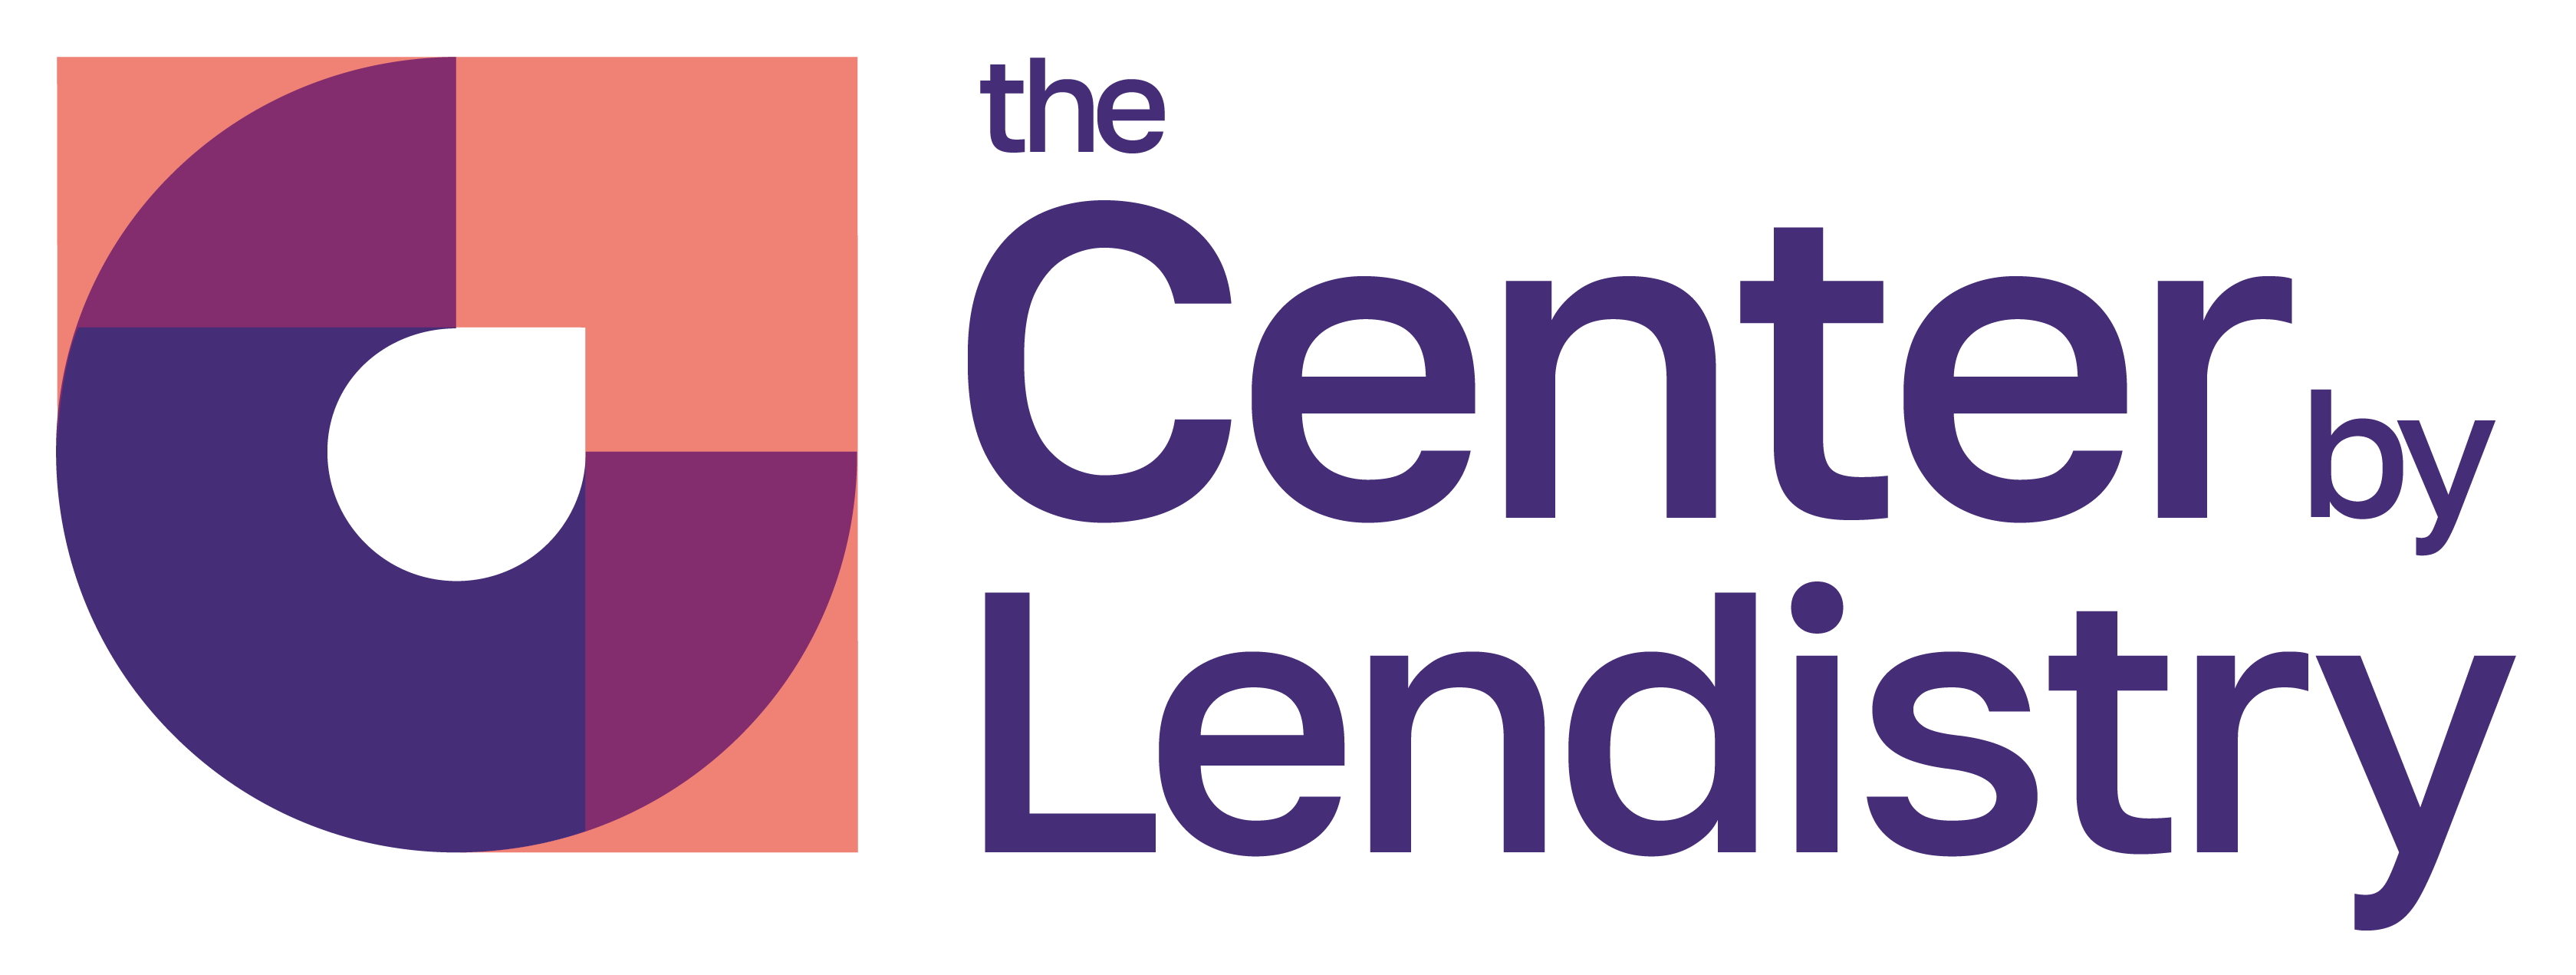 Logotipo de The Center by Lendistry